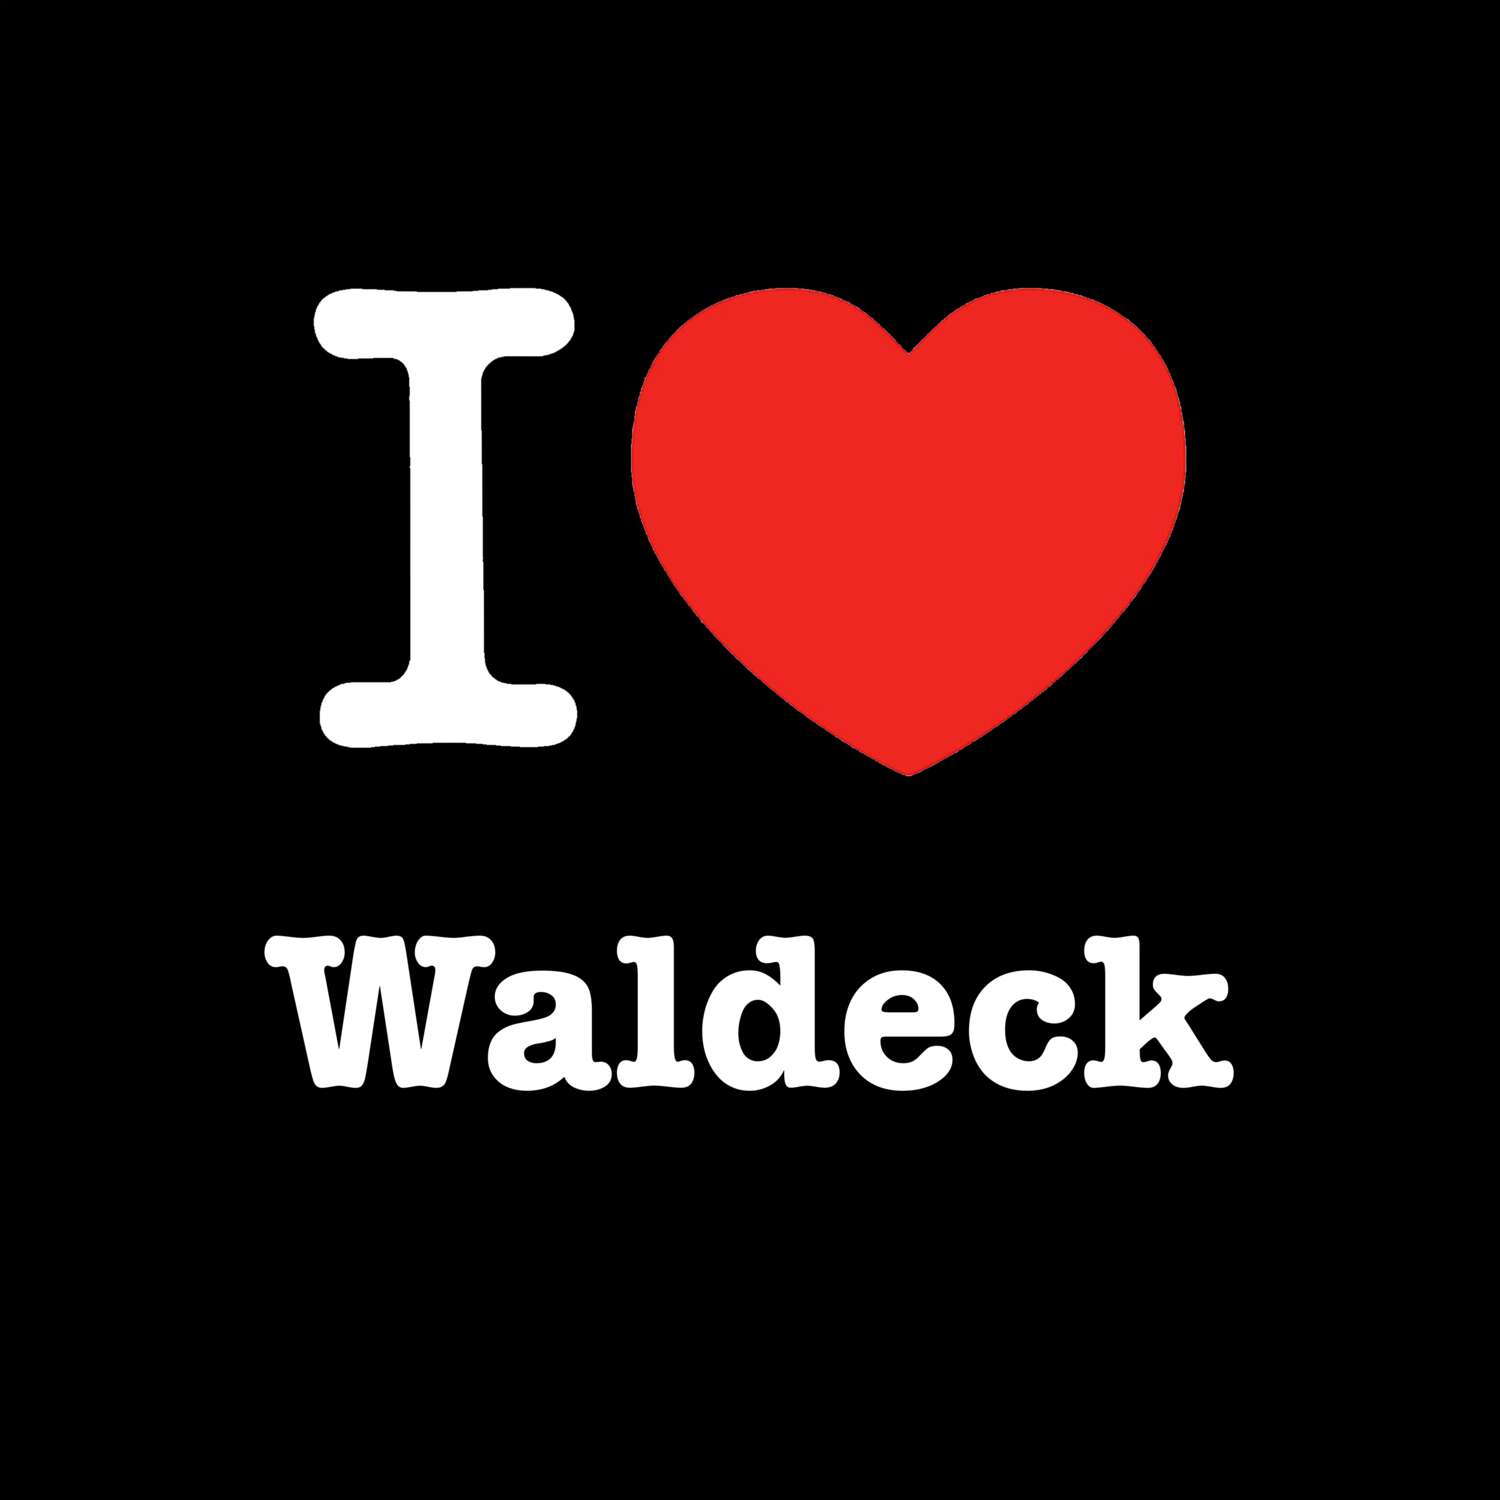 Waldeck T-Shirt »I love«